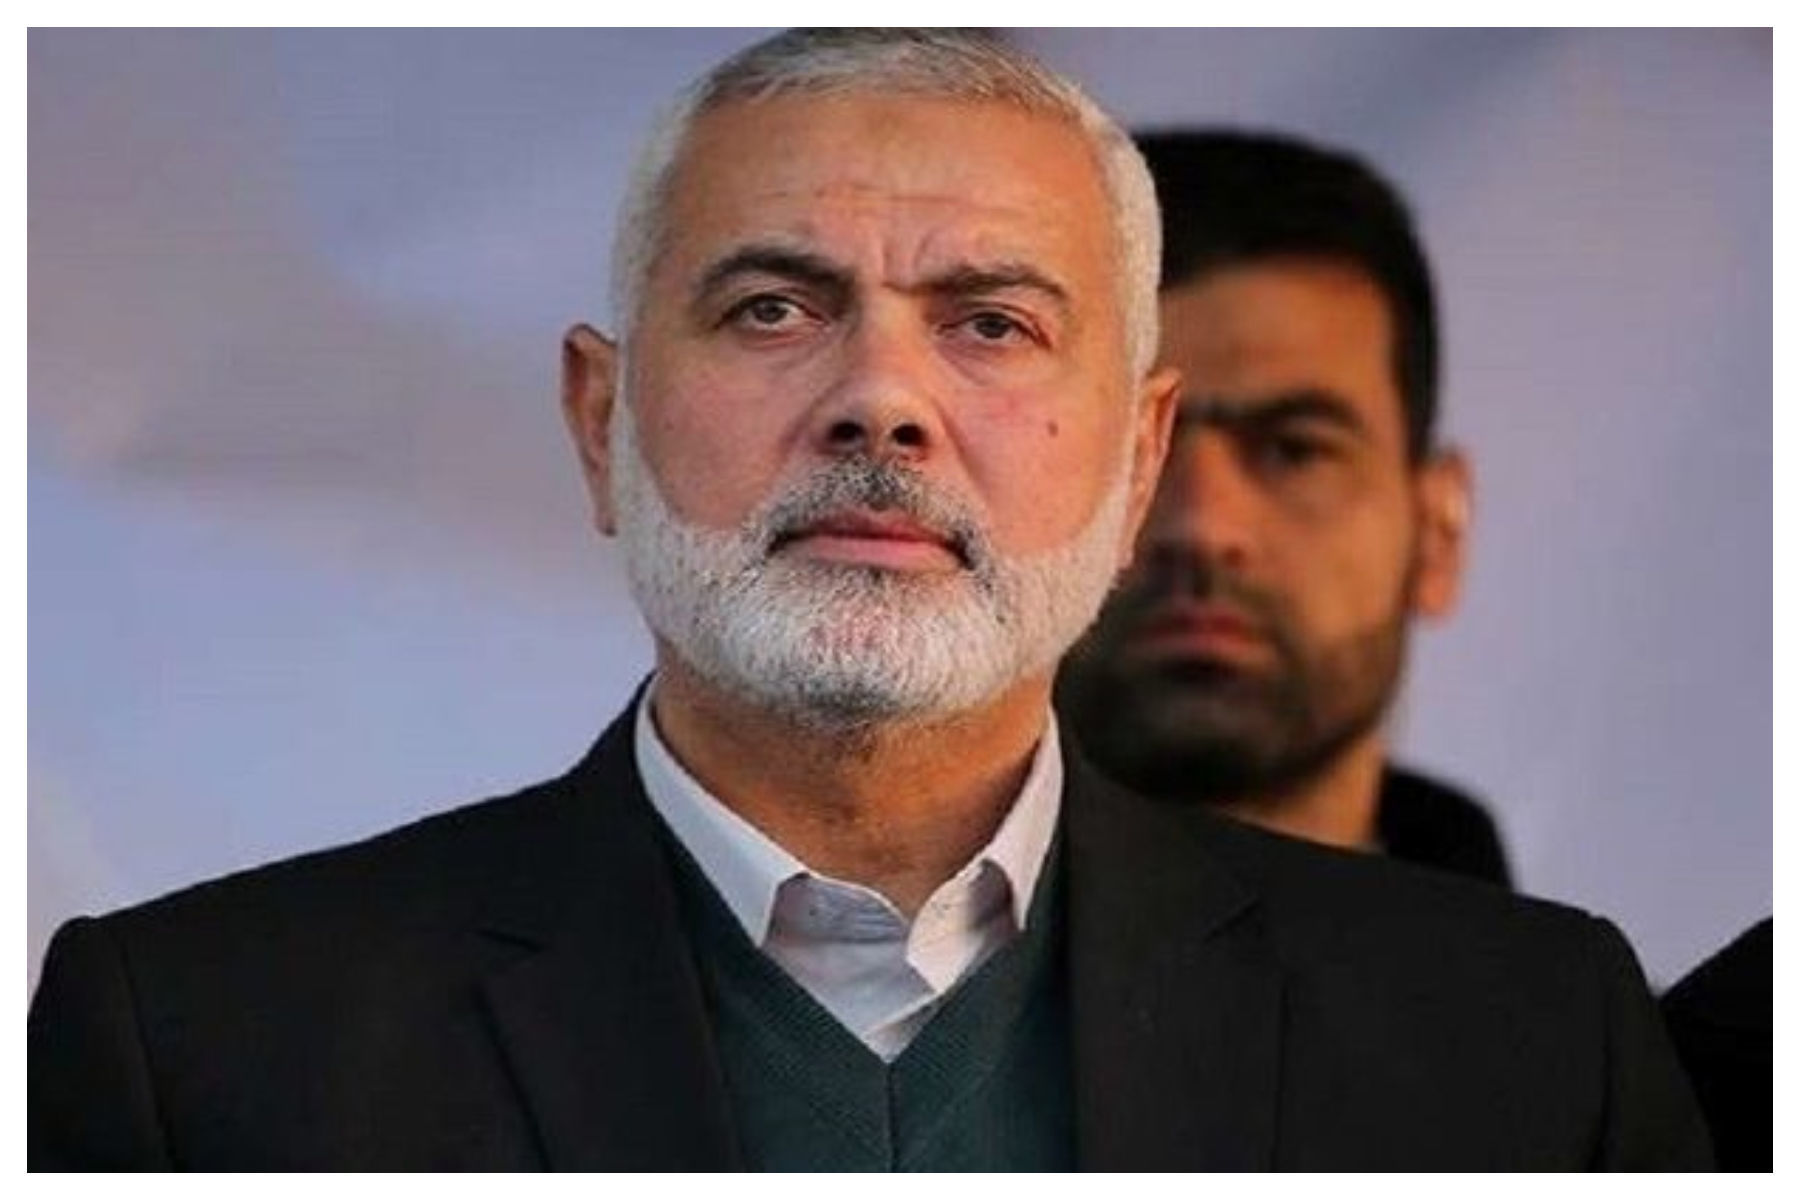 The head of Hamas Political Bureau visits Iran